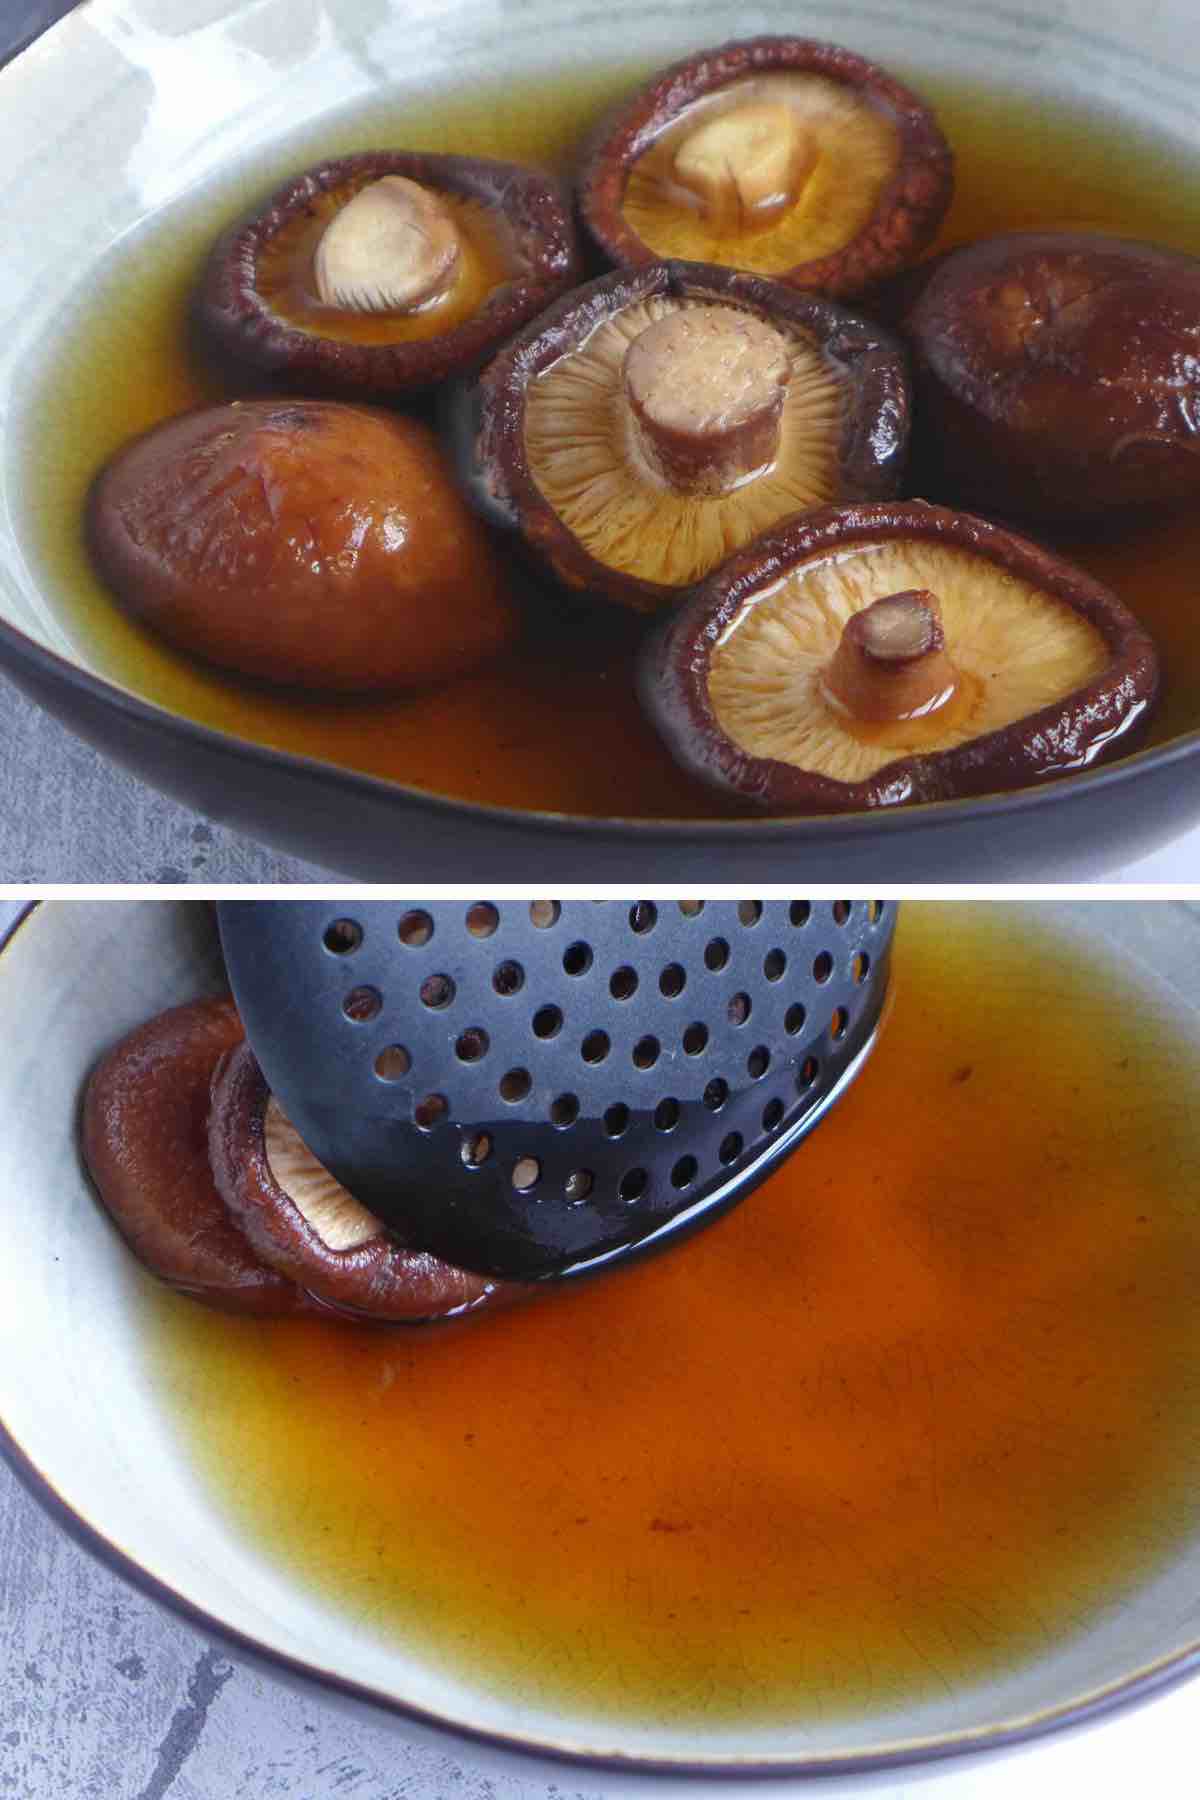 shiitake mushrooms soaking in water.